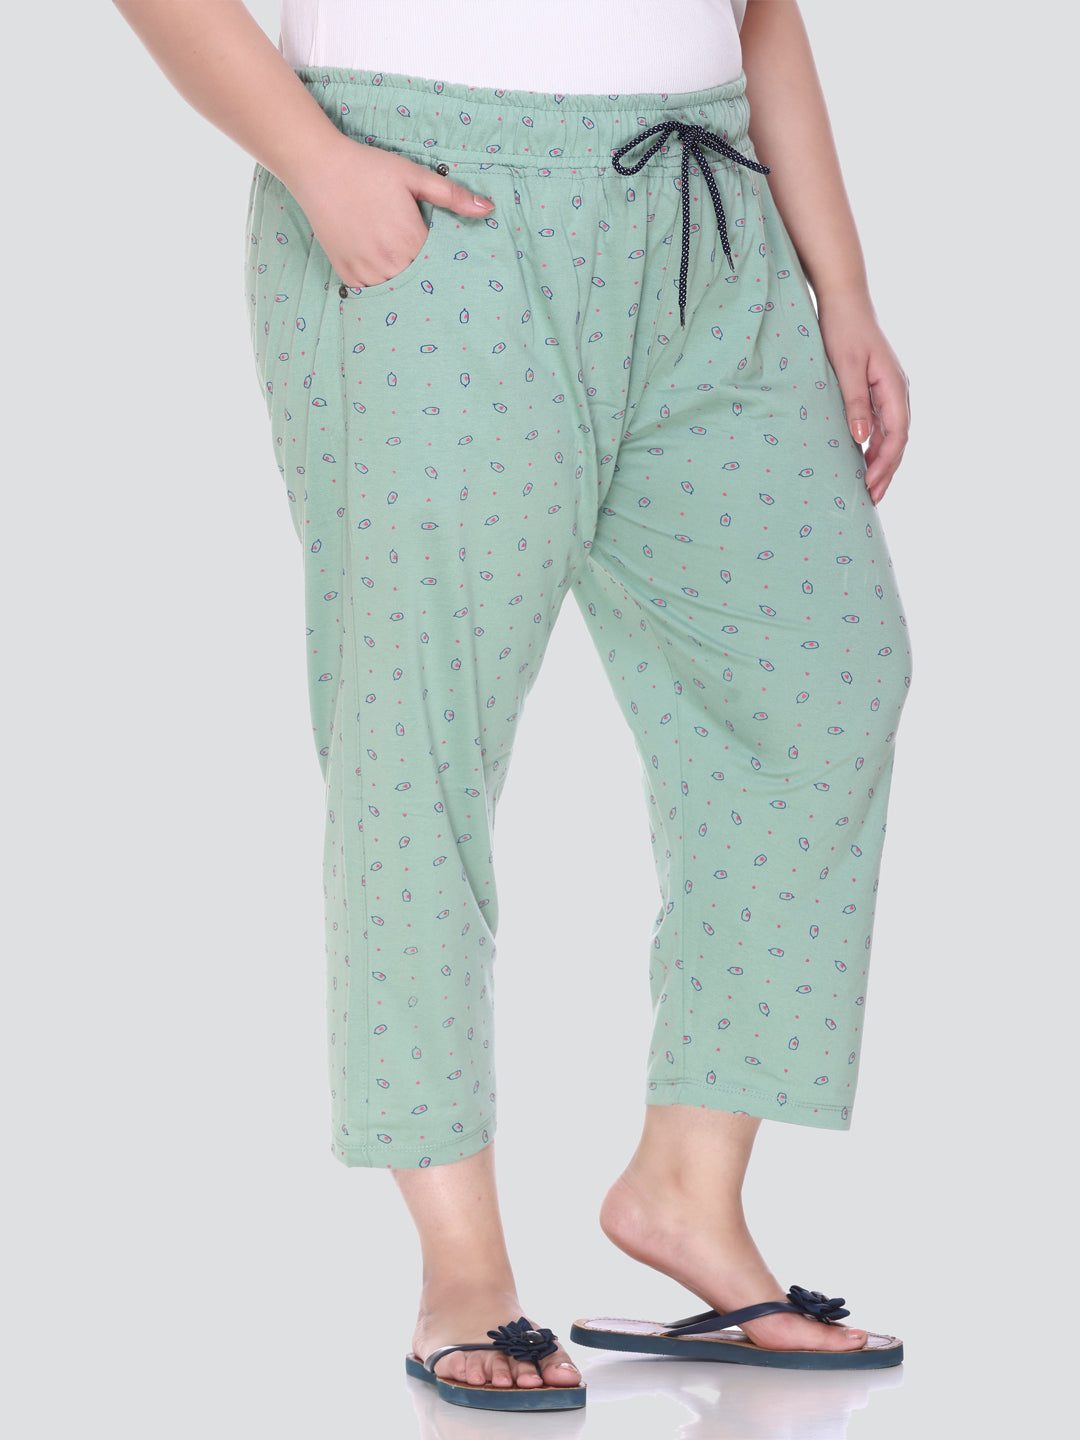 6331-10008-S Just Love Women Pajama Capri Pants / Sleepwear, Cupcake Dots -  Grey, Small at Amazon Women's Clothing store